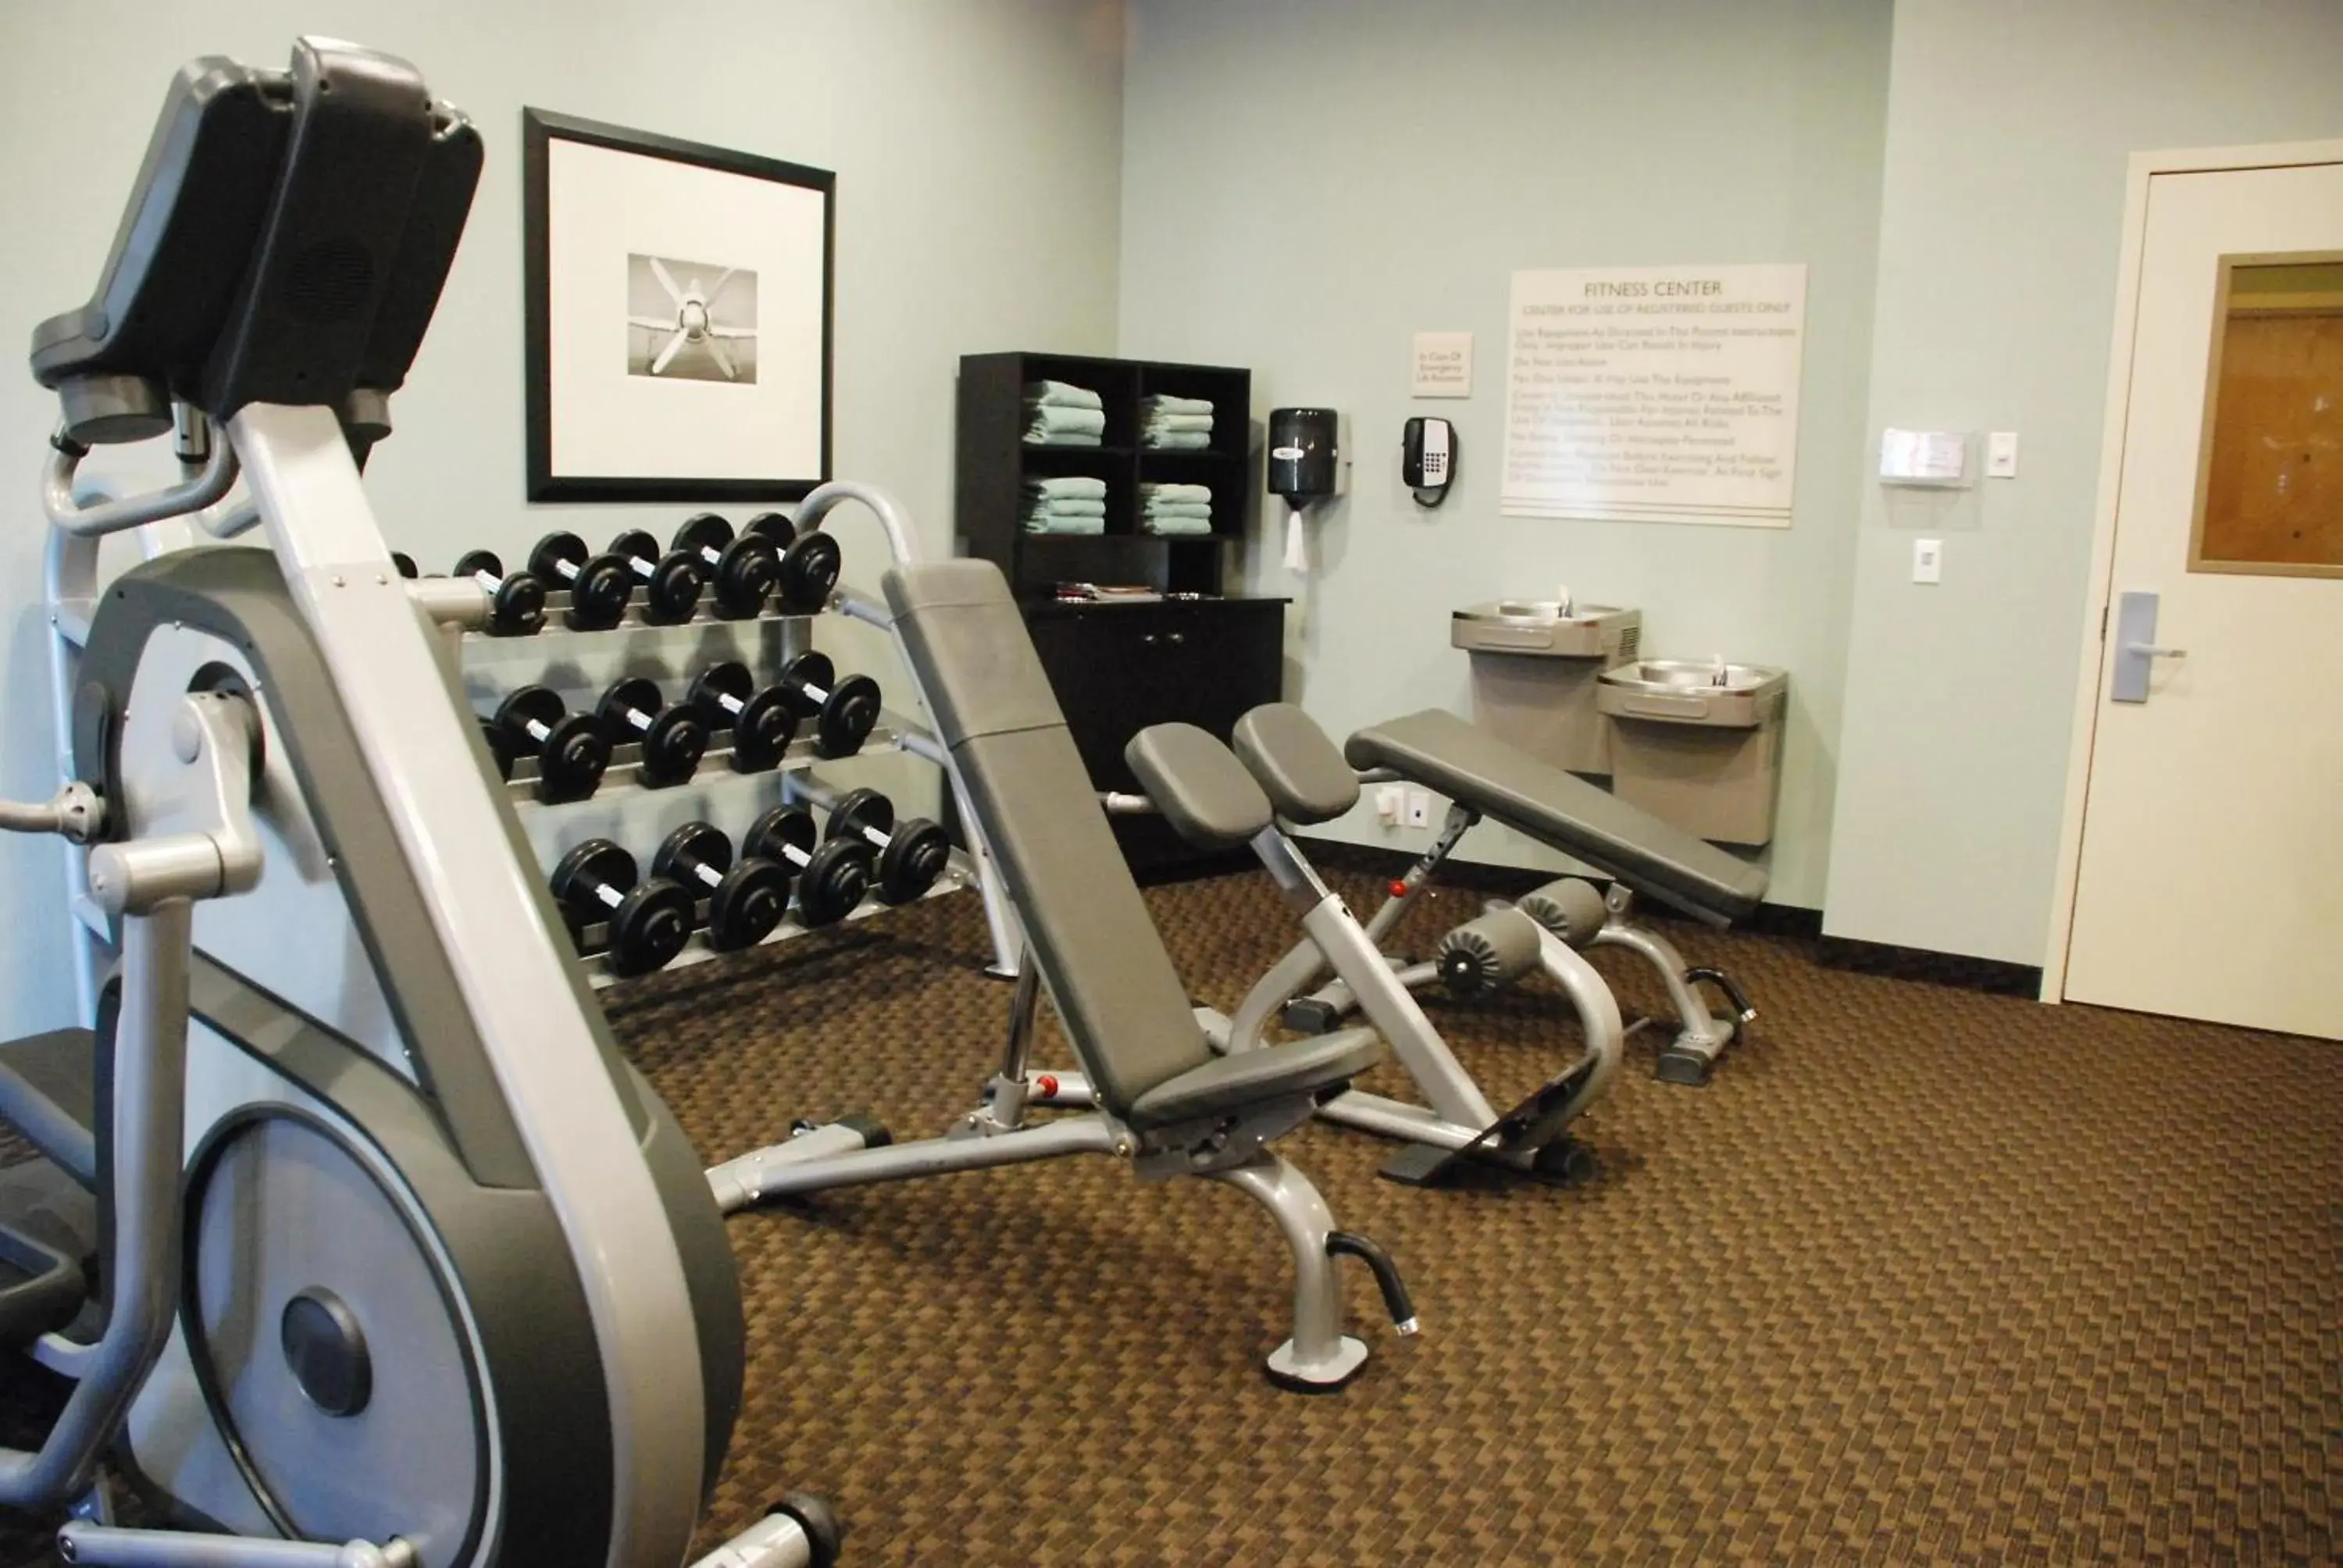 Fitness centre/facilities, Fitness Center/Facilities in Hilton Garden Inn Lakeland